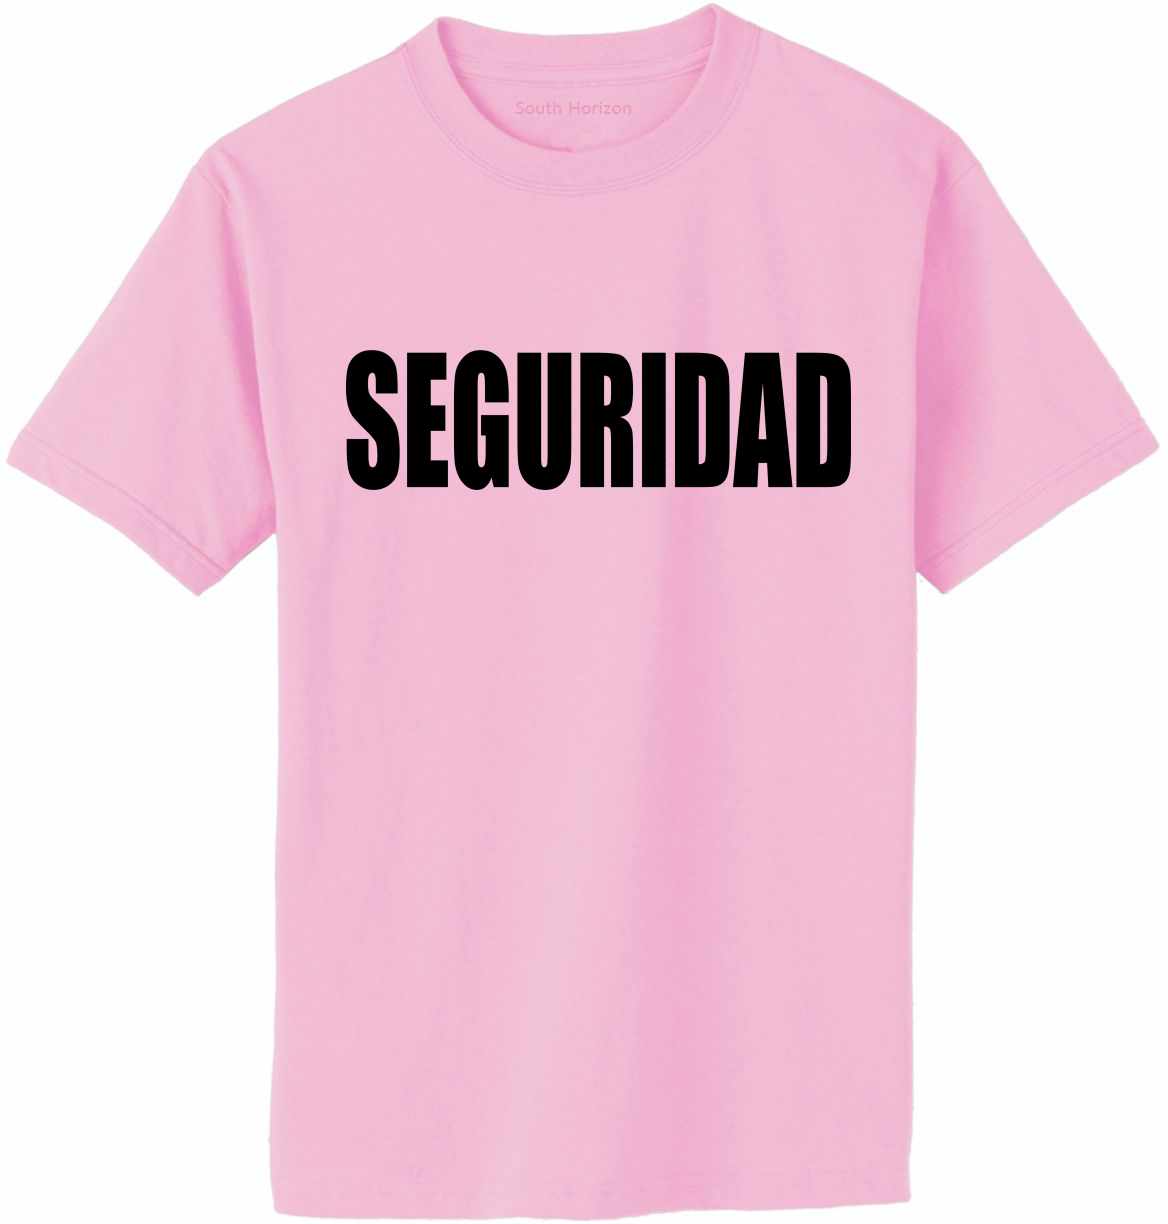 SEGURIDAD Adult T-Shirt (#691-1)